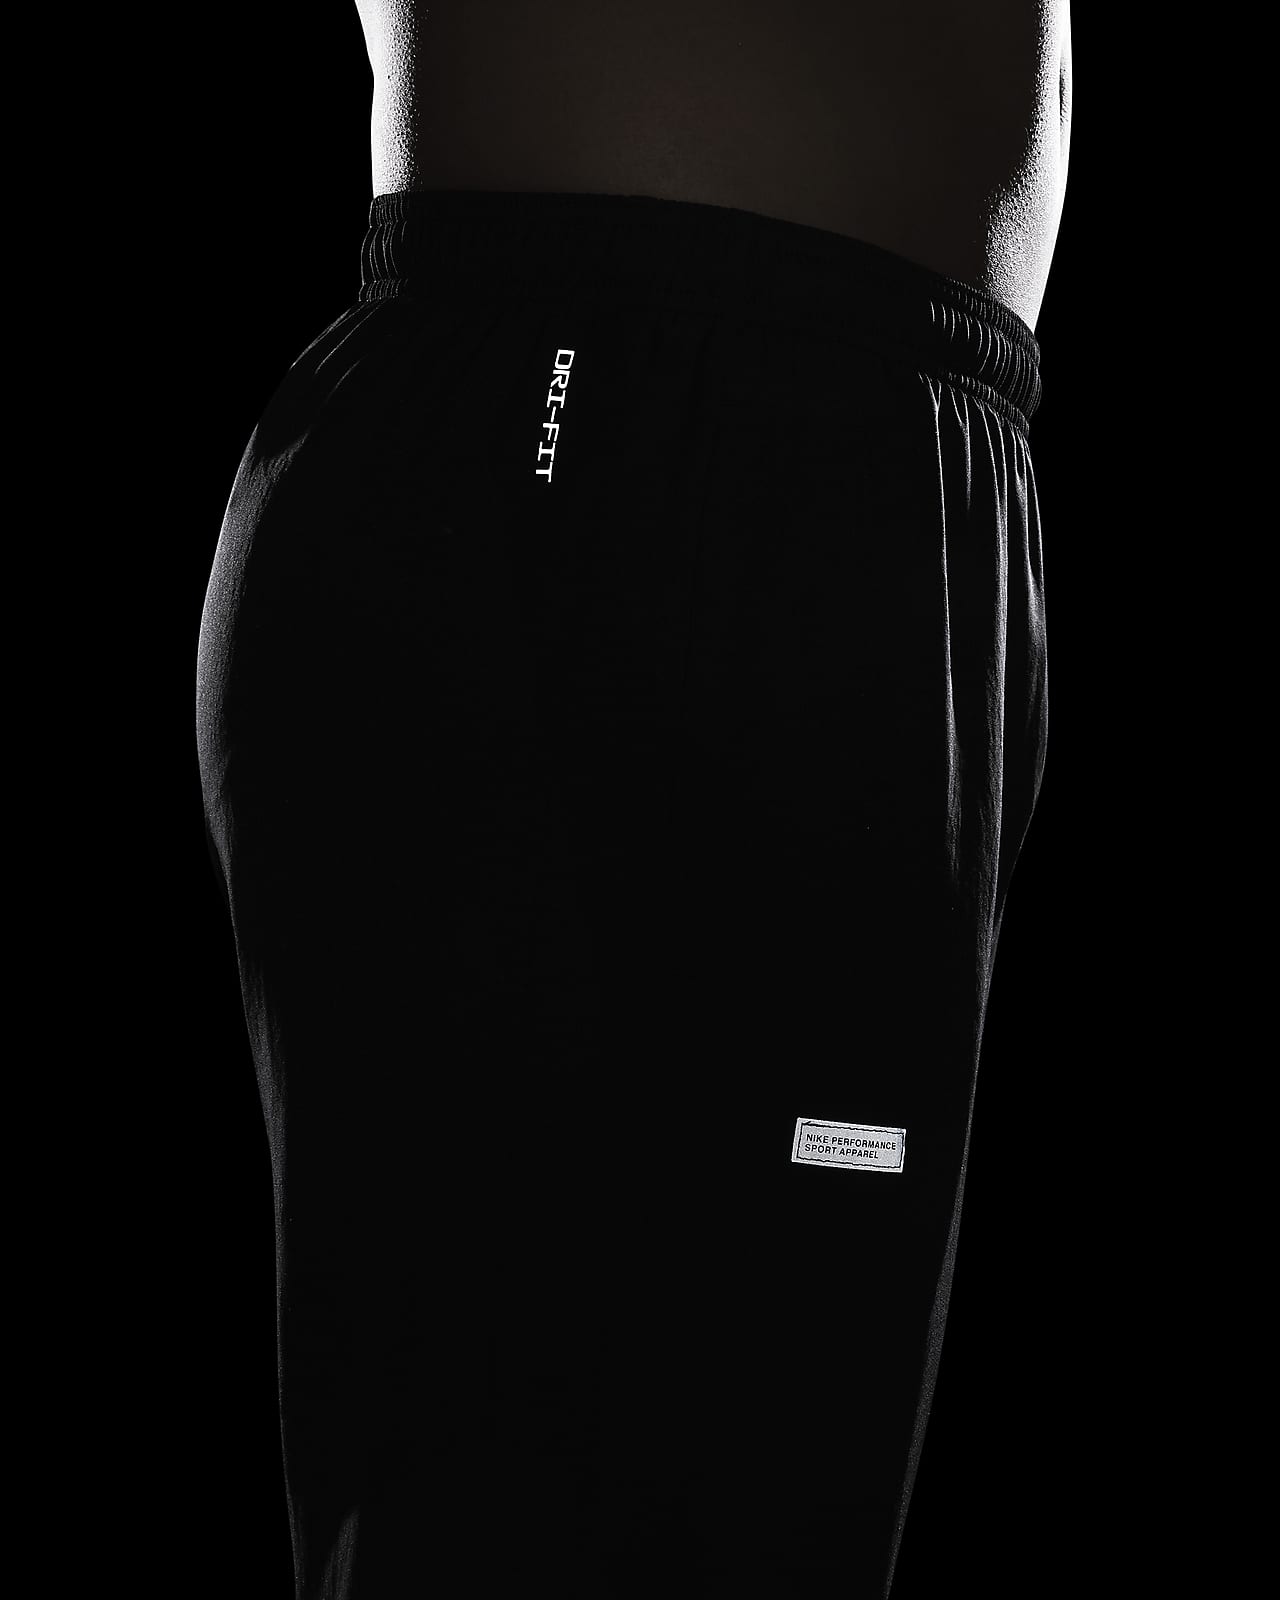 Nike Dri-FIT Challenger Woven Pants Heren